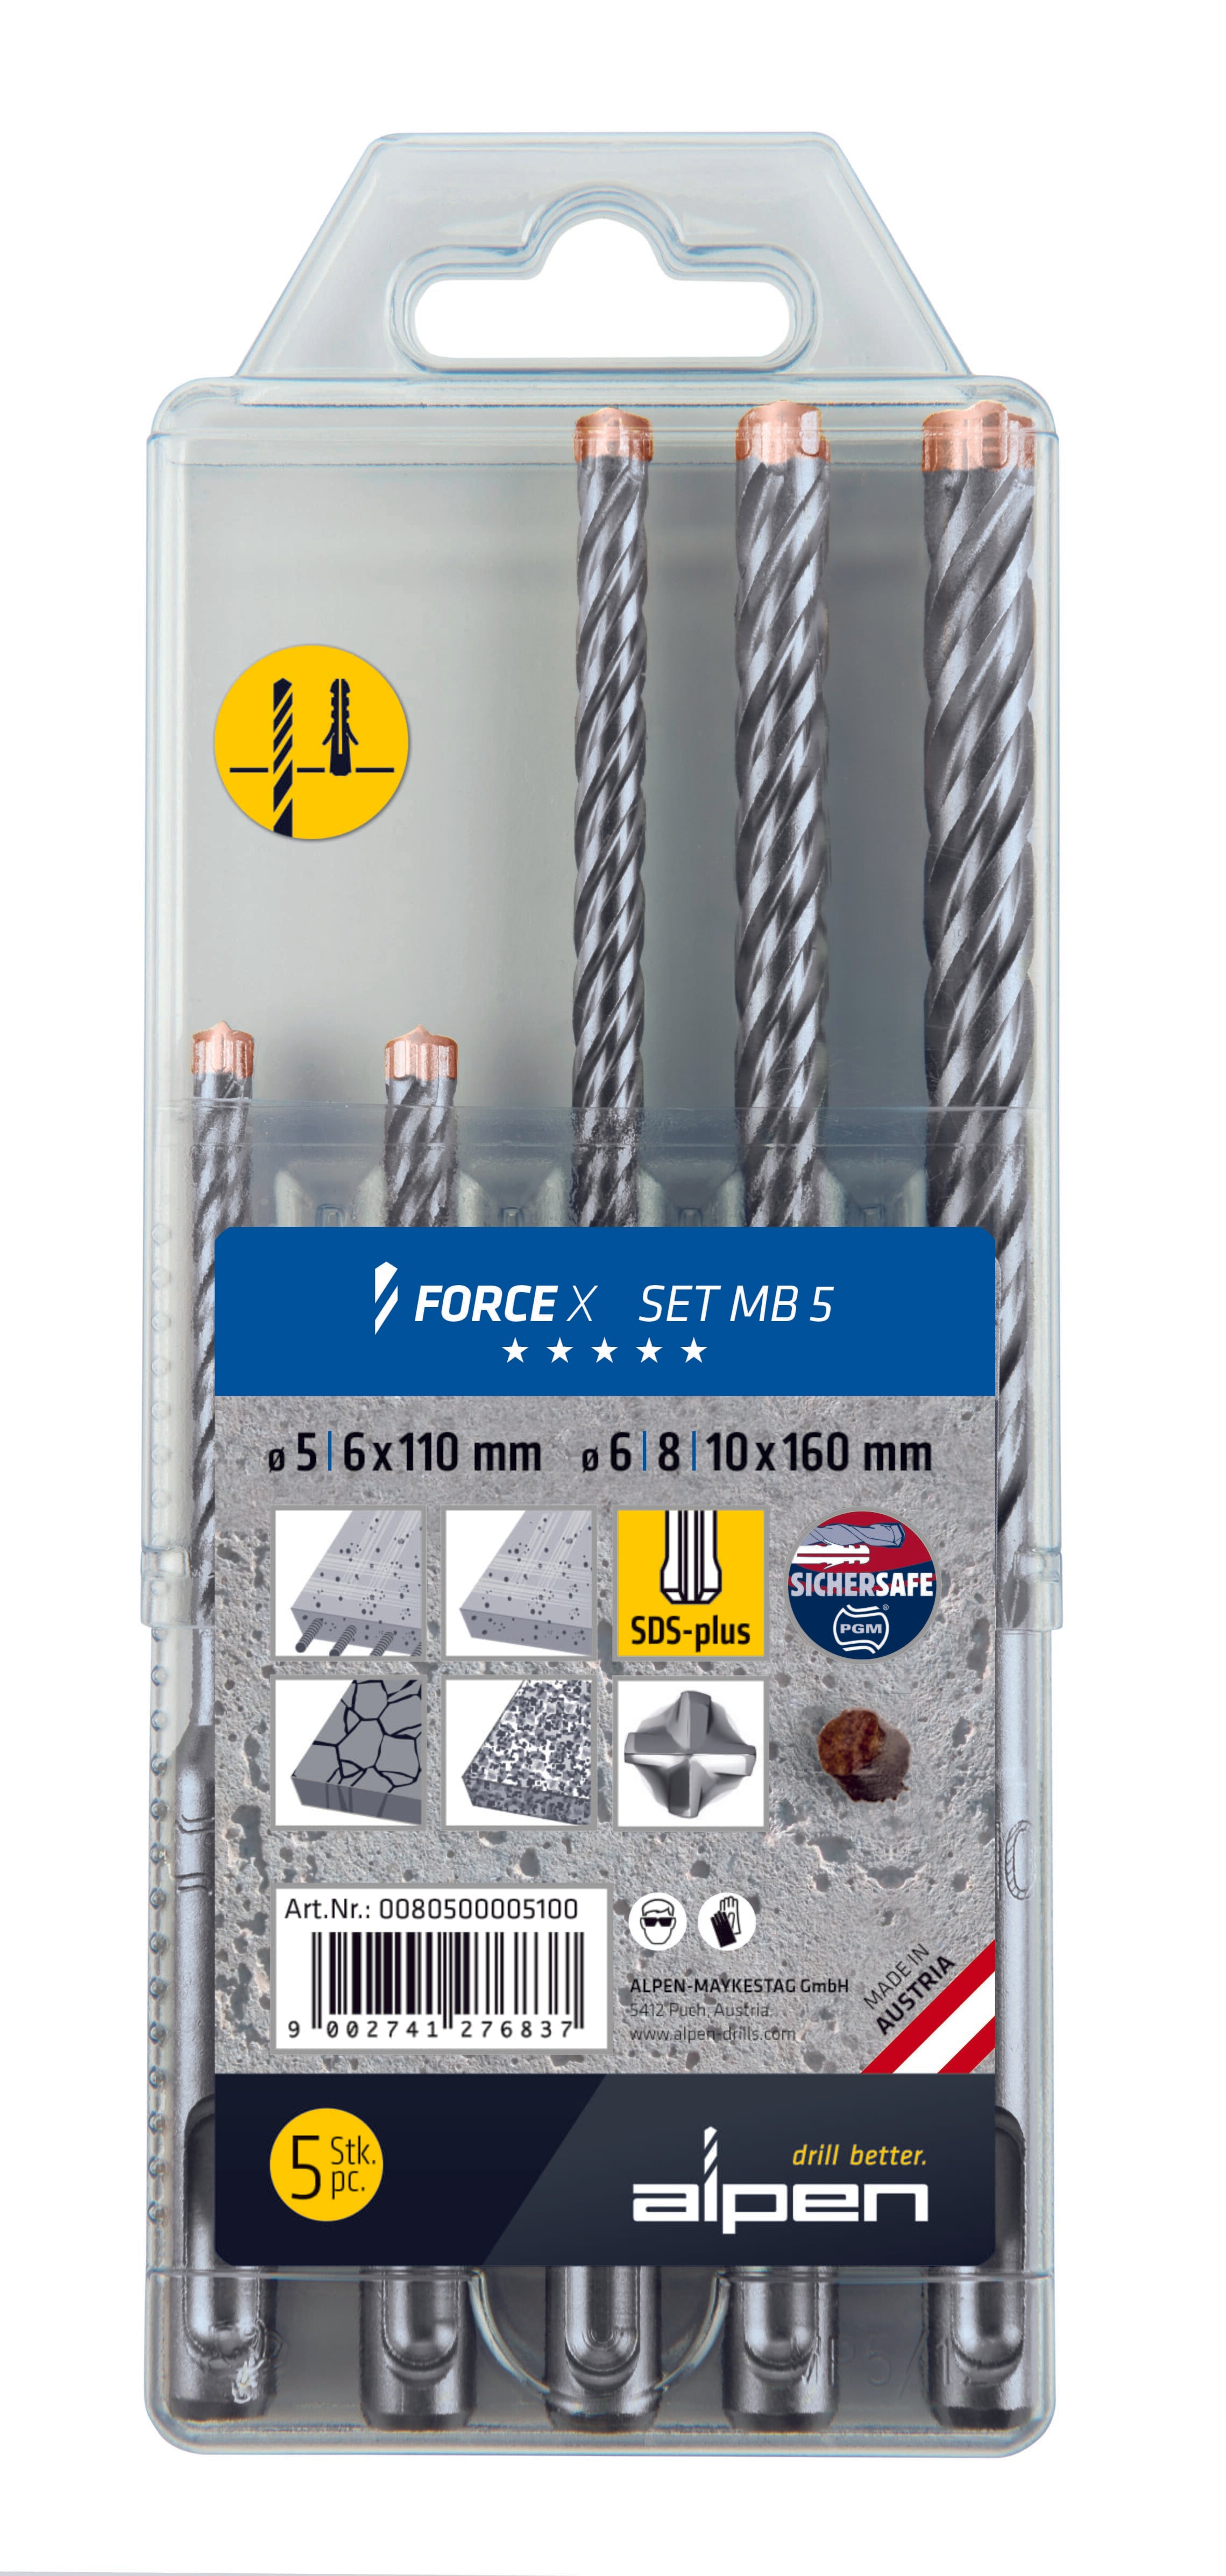 Alpen Series 805 Force X Sds-Plus Masonary Drill Set Mb5 5Pce